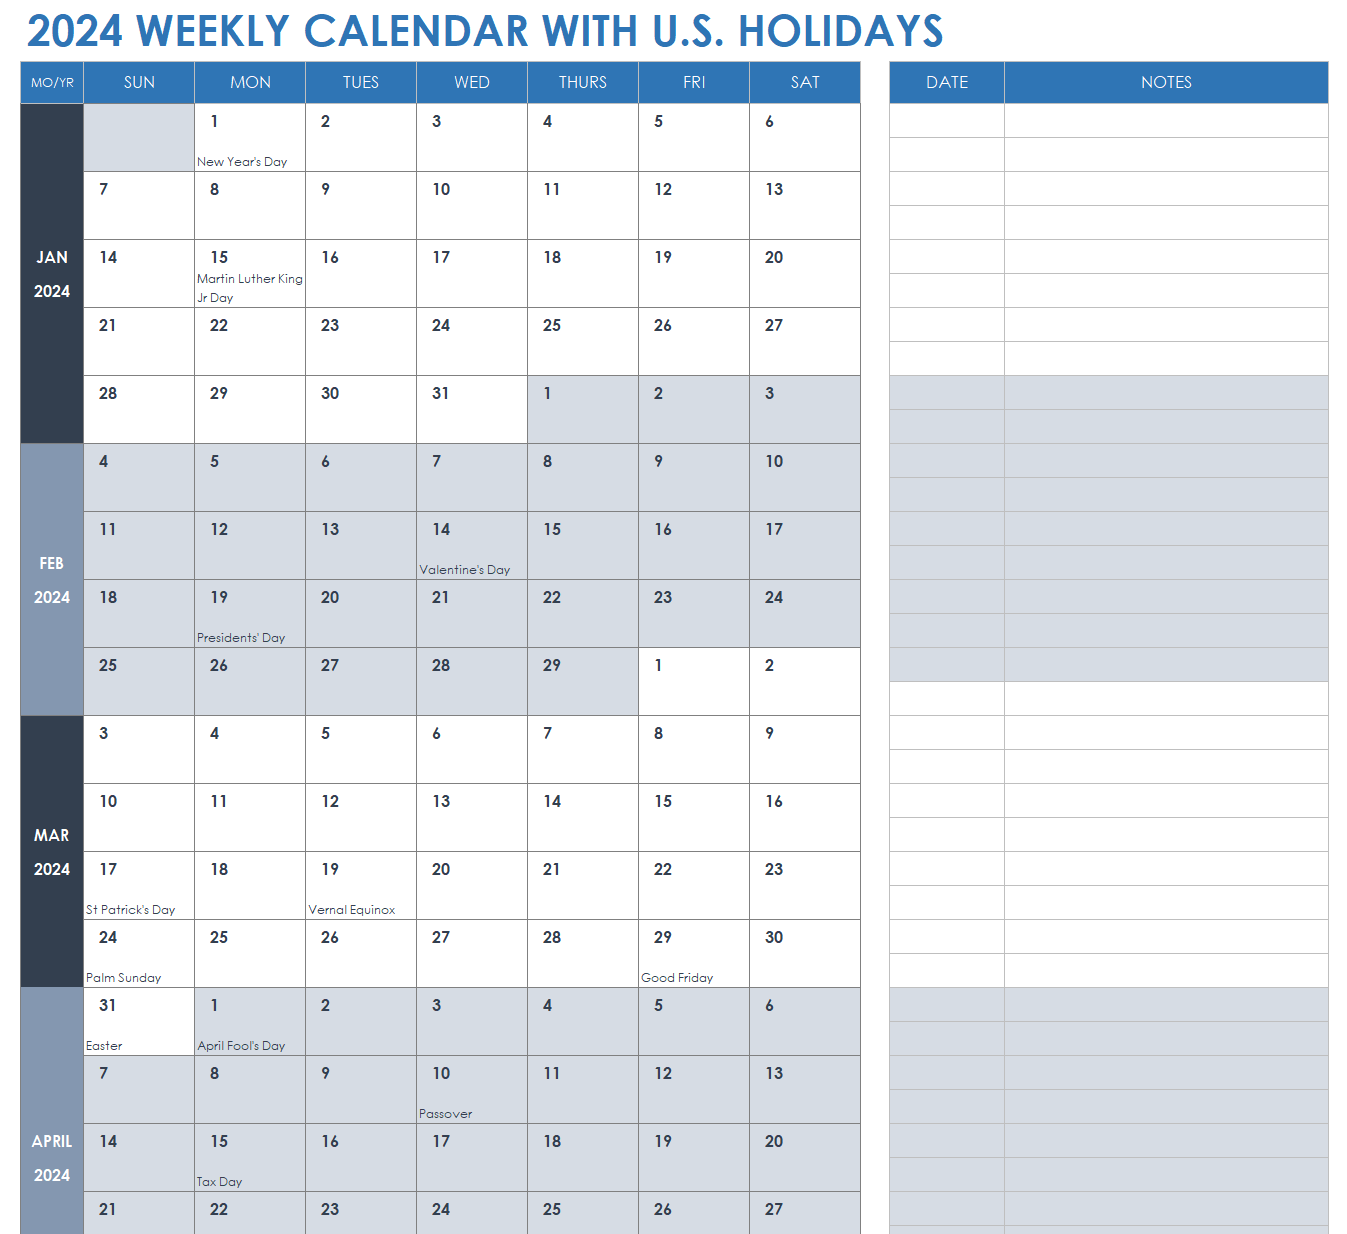 2024 Weekly Calendar with U.S. Holidays